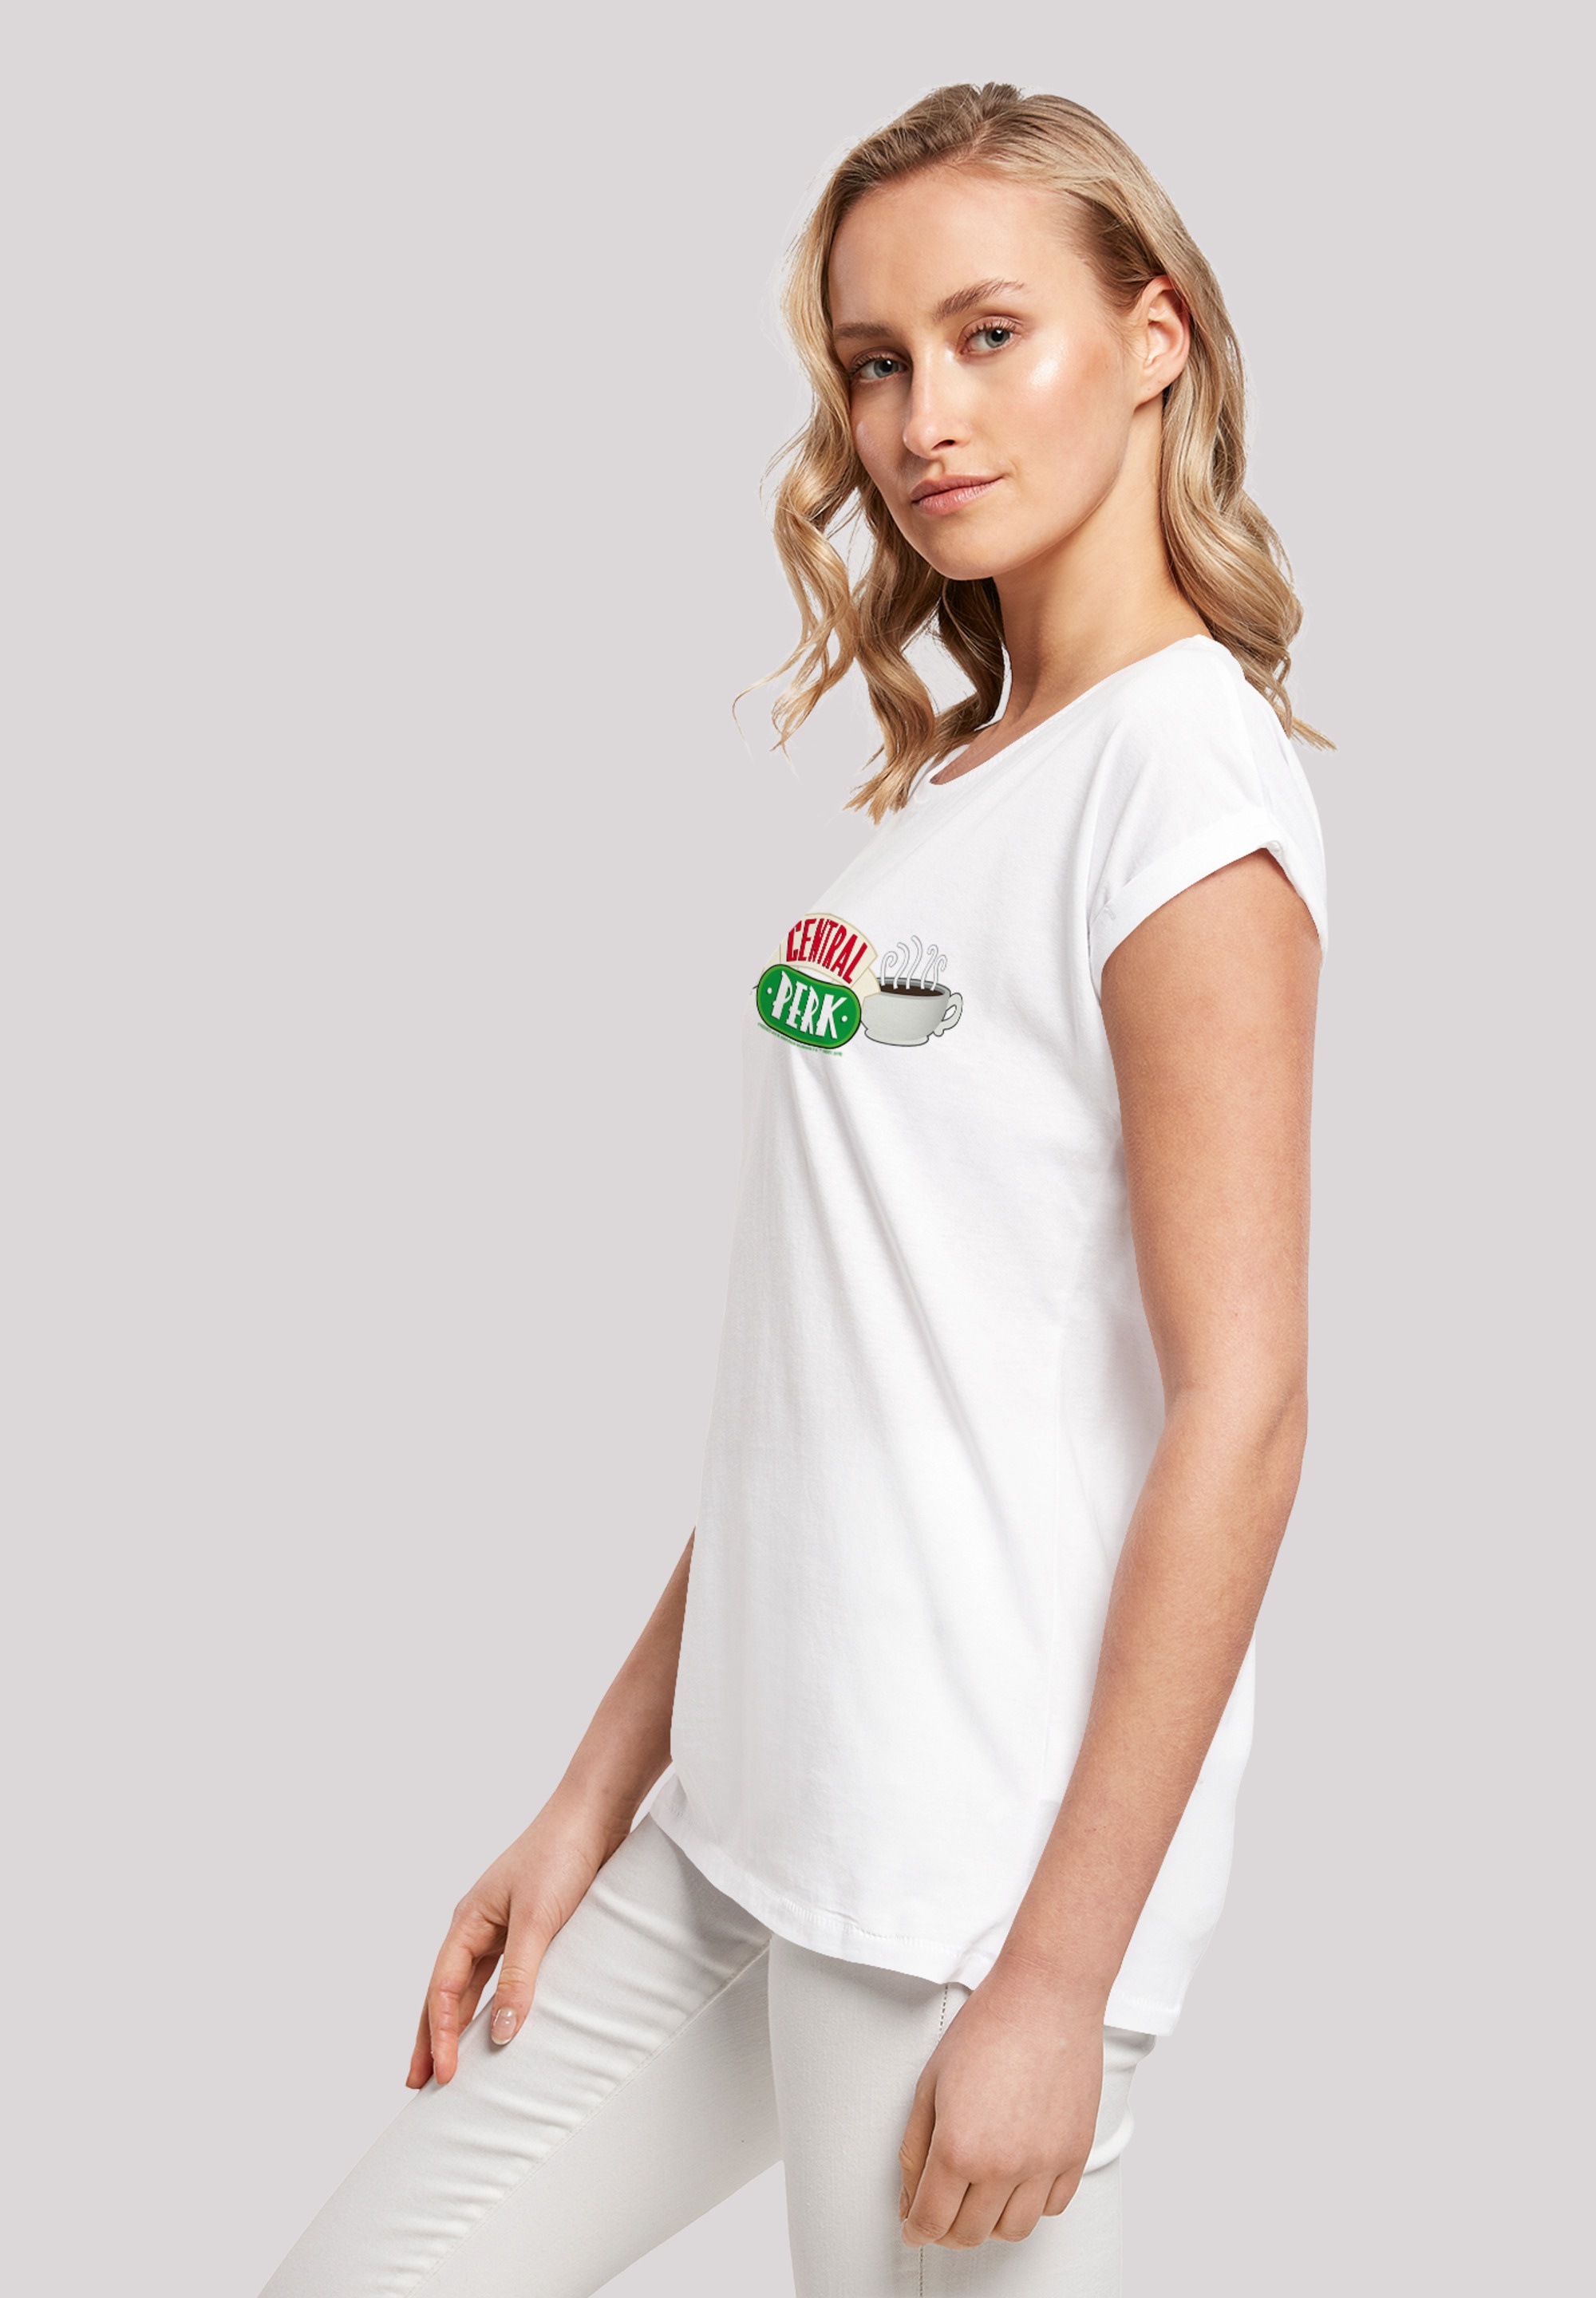 F4NT4STIC Serie BLK\'«, Perk »\'FRIENDS kaufen TV Central Print T-Shirt